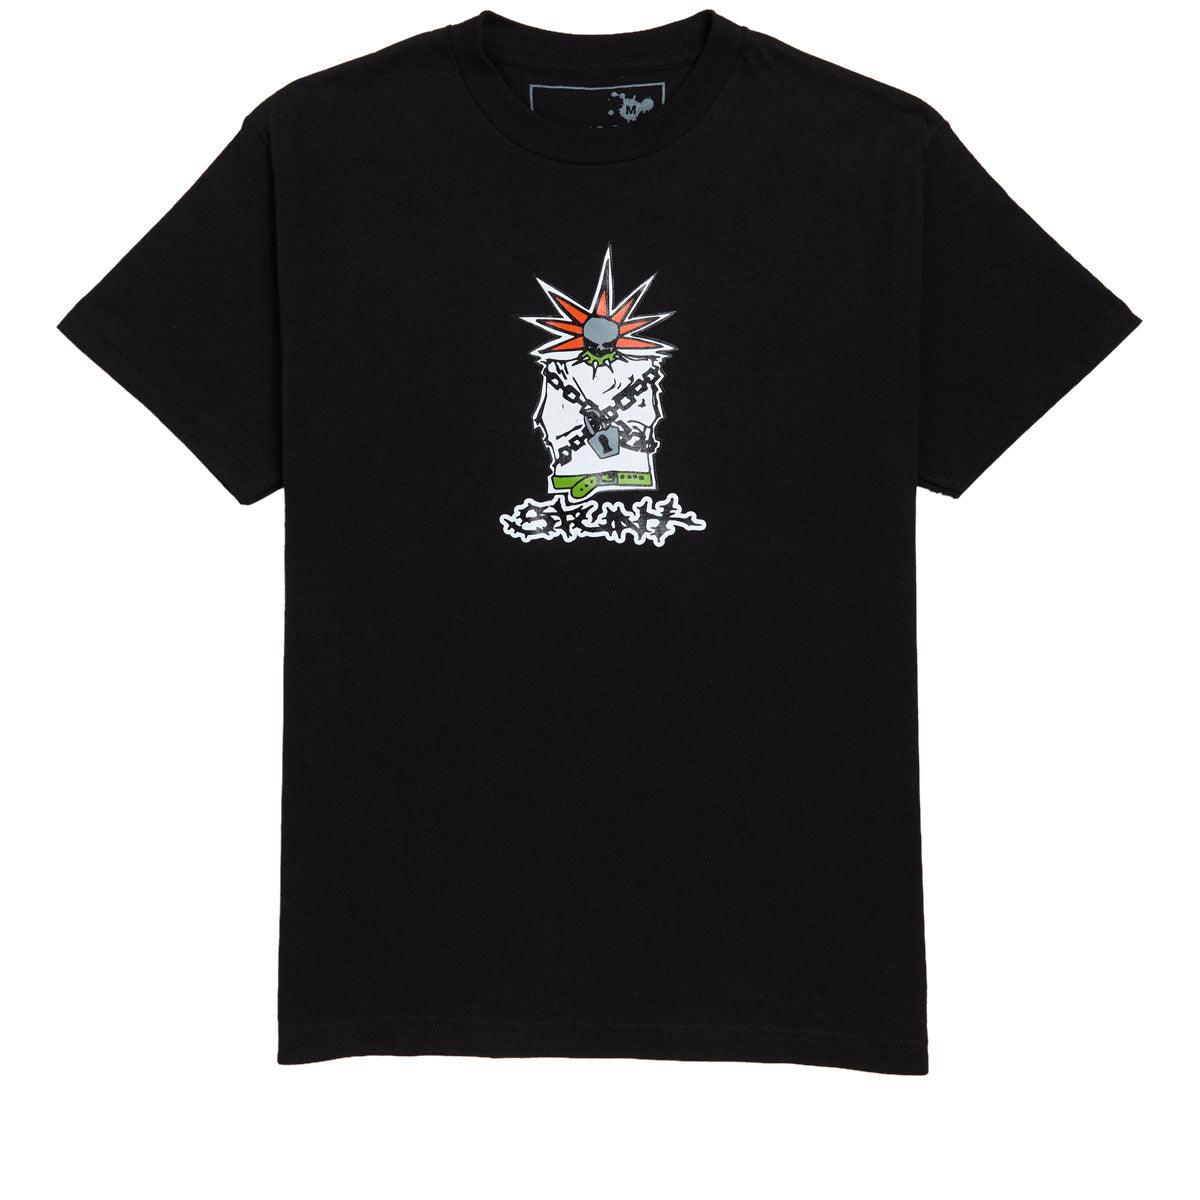 Stunt Pyscho T-Shirt - Black image 1